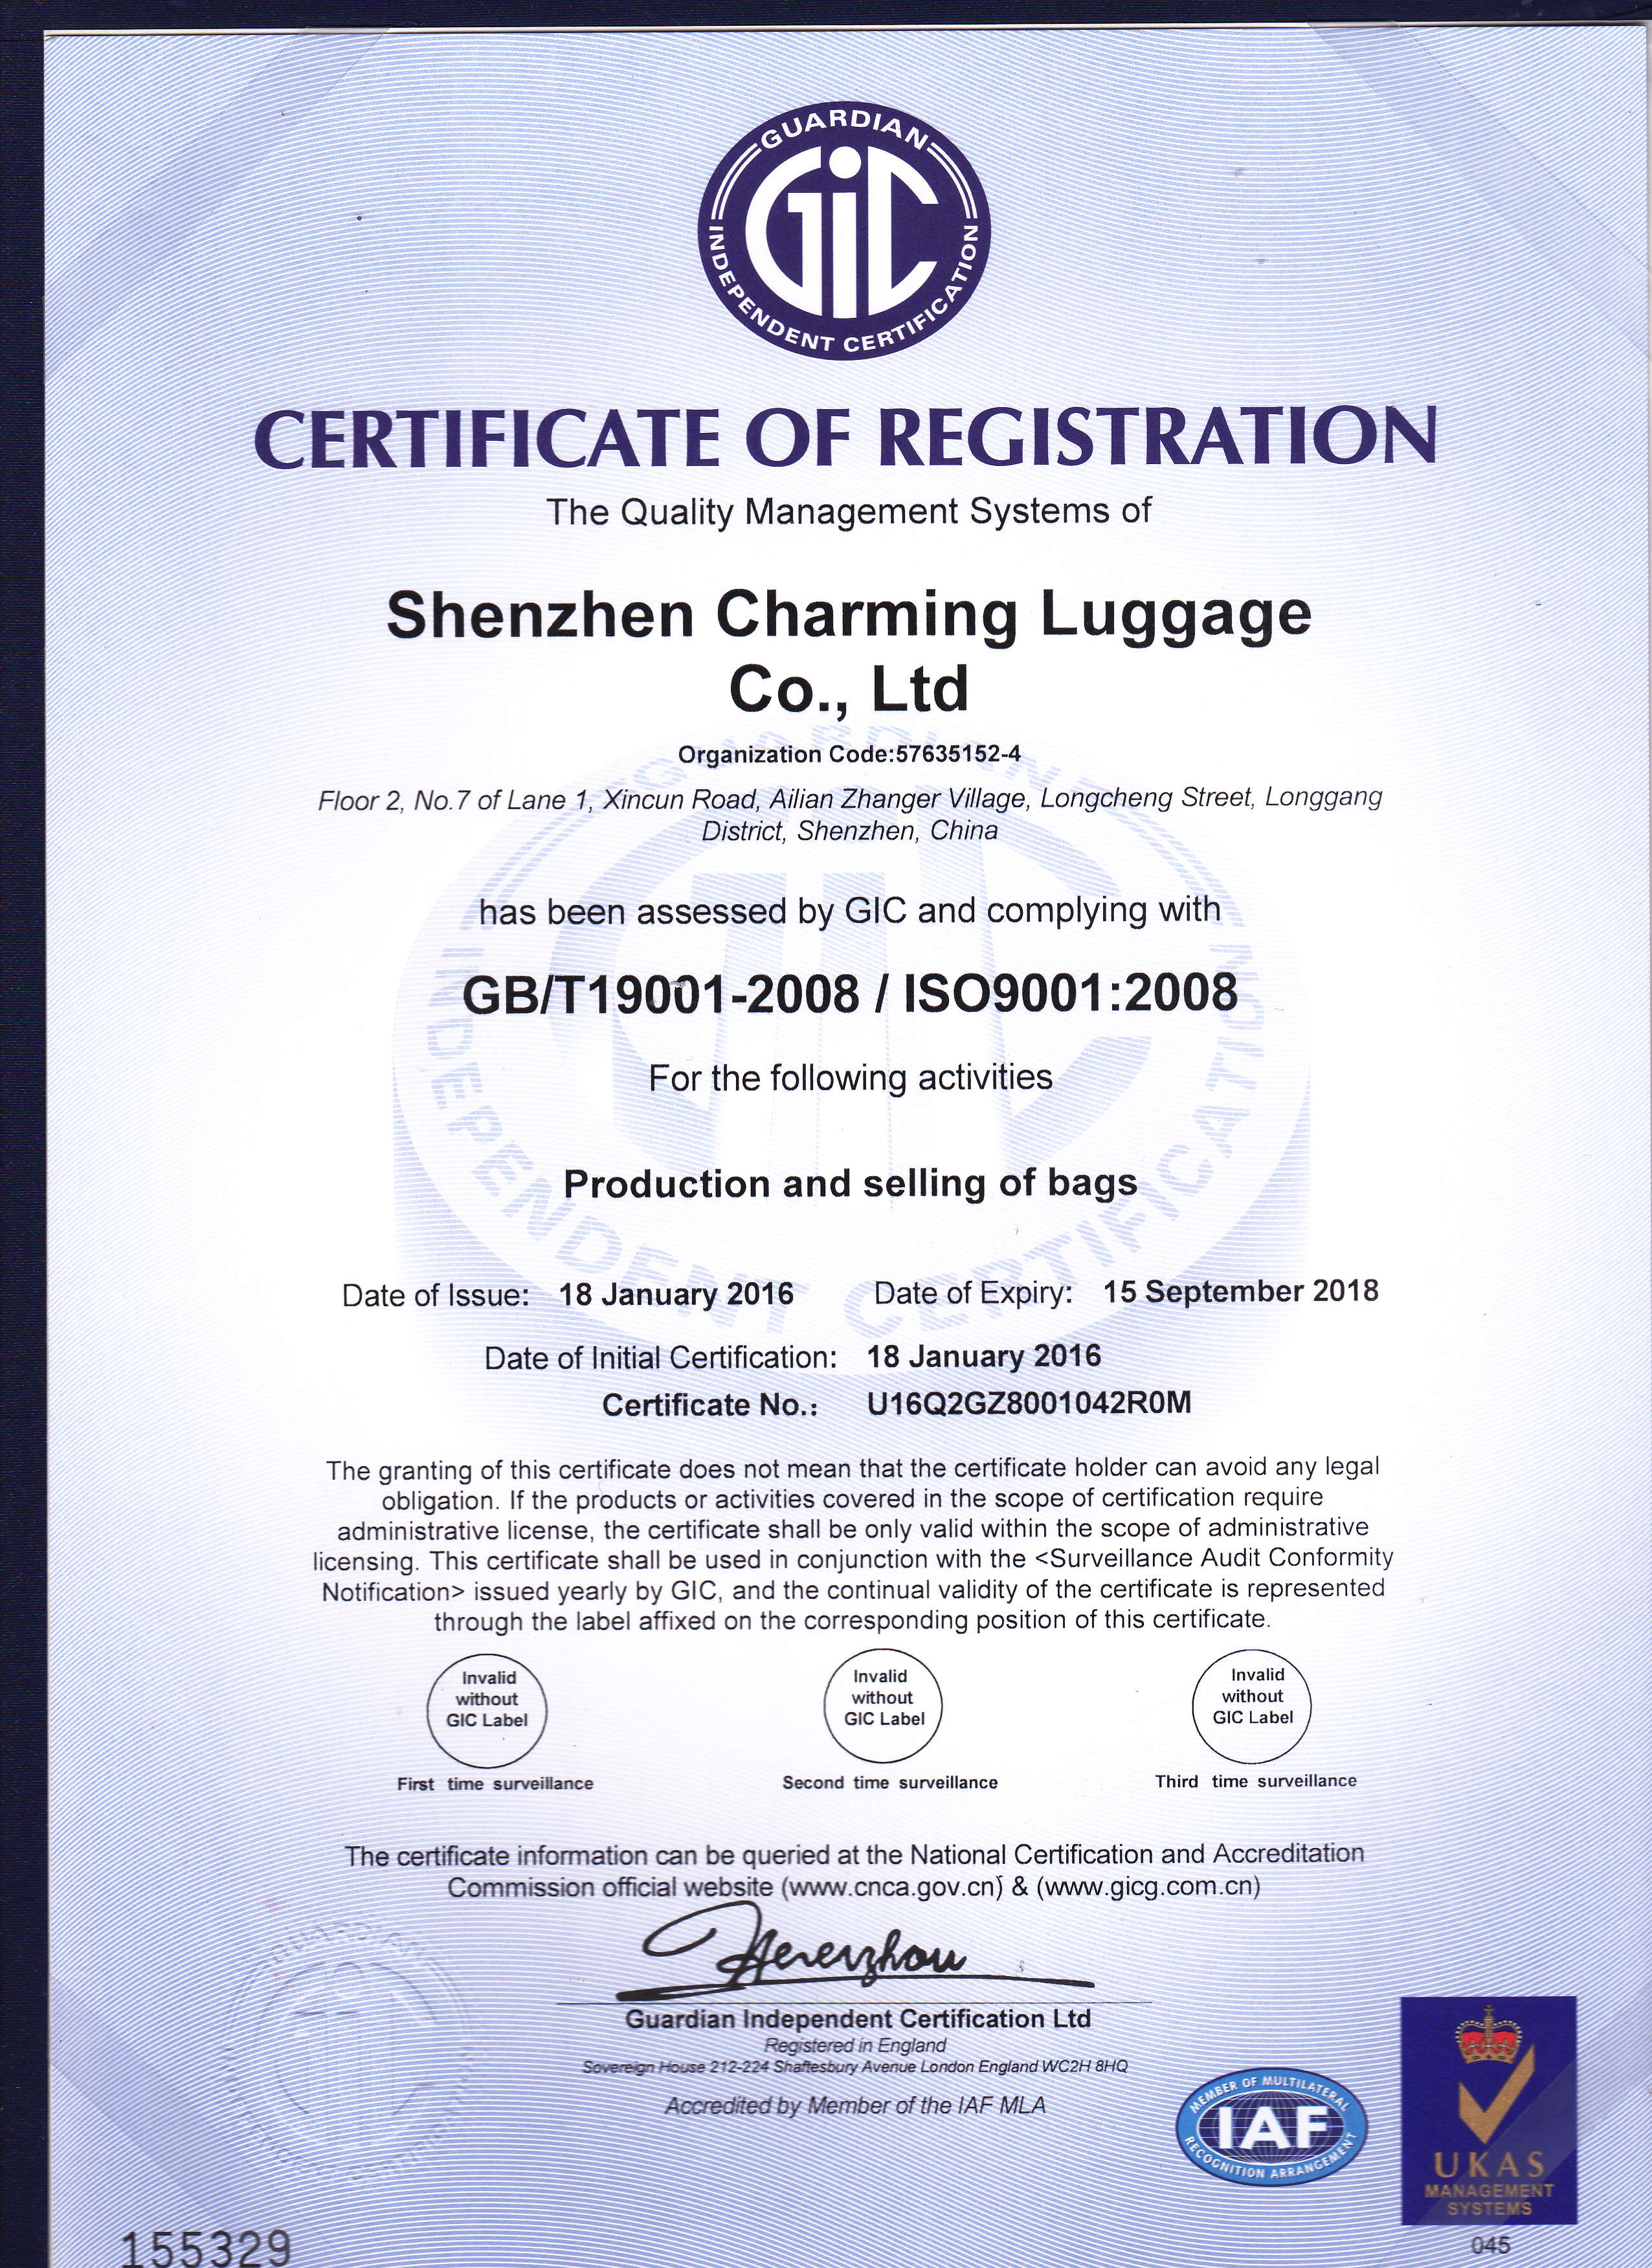 IS9001 certificate